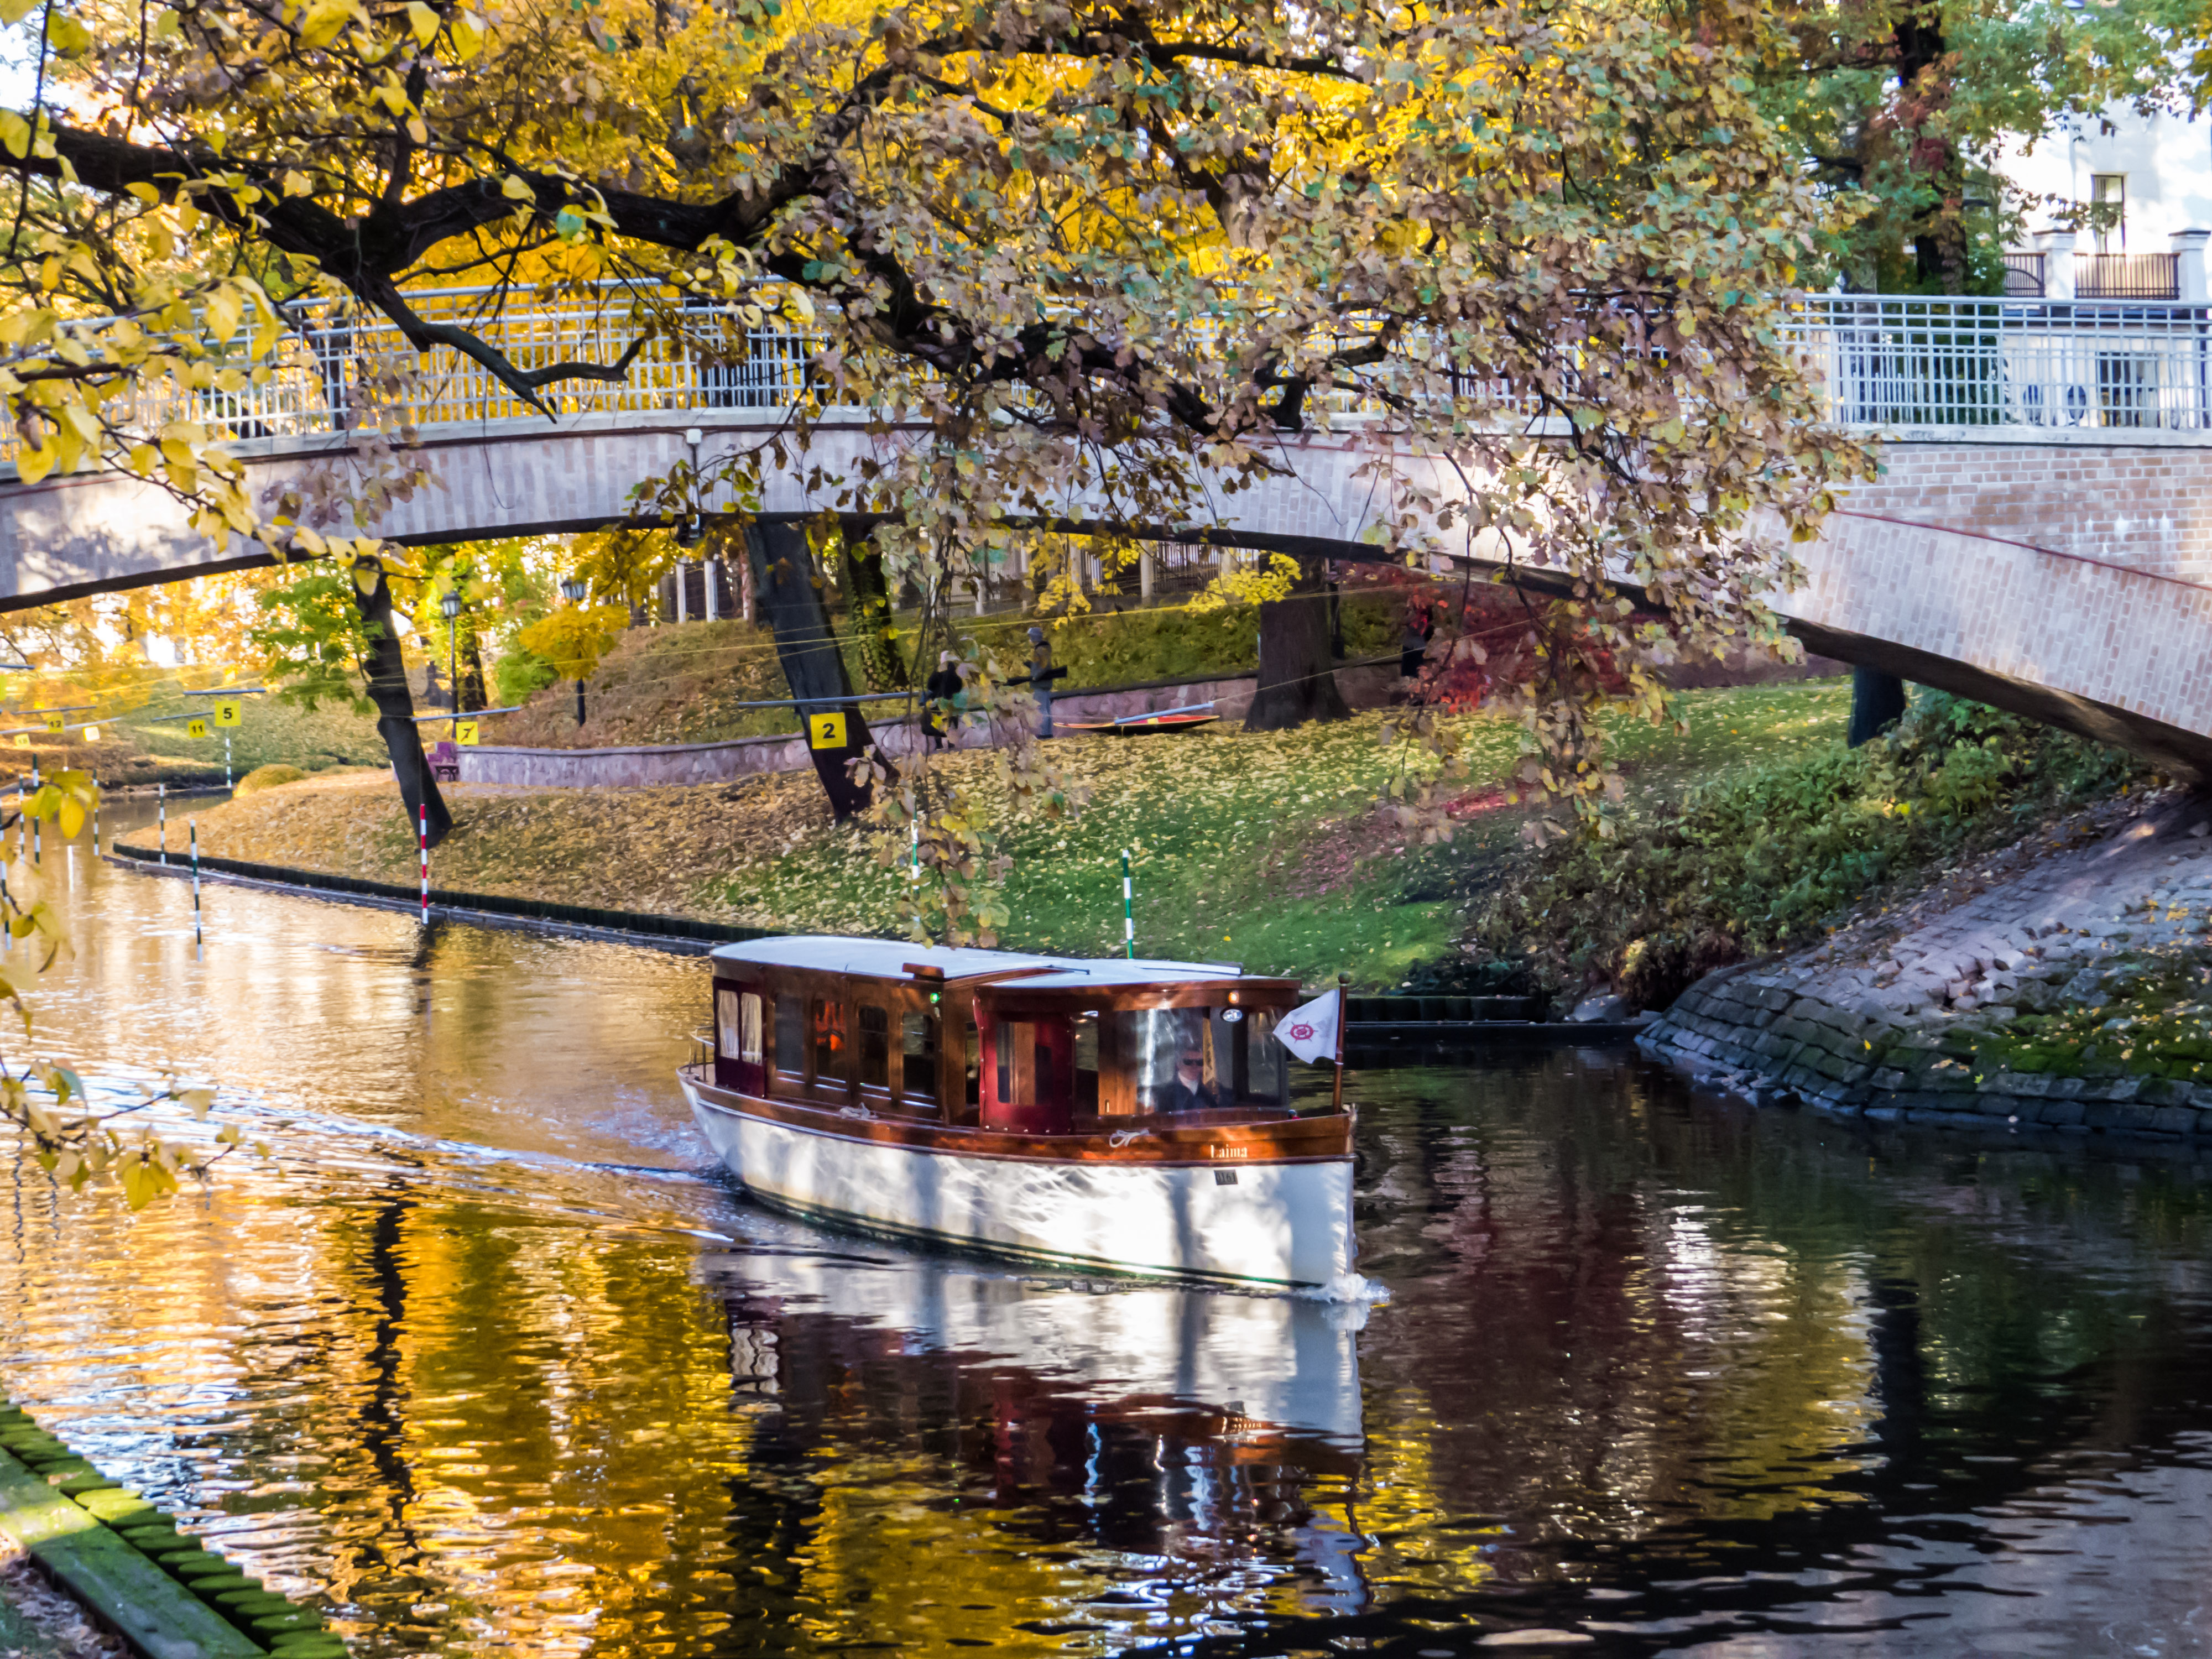 Boat under the bridge, Autumn, Love, Trees, Transport, HQ Photo